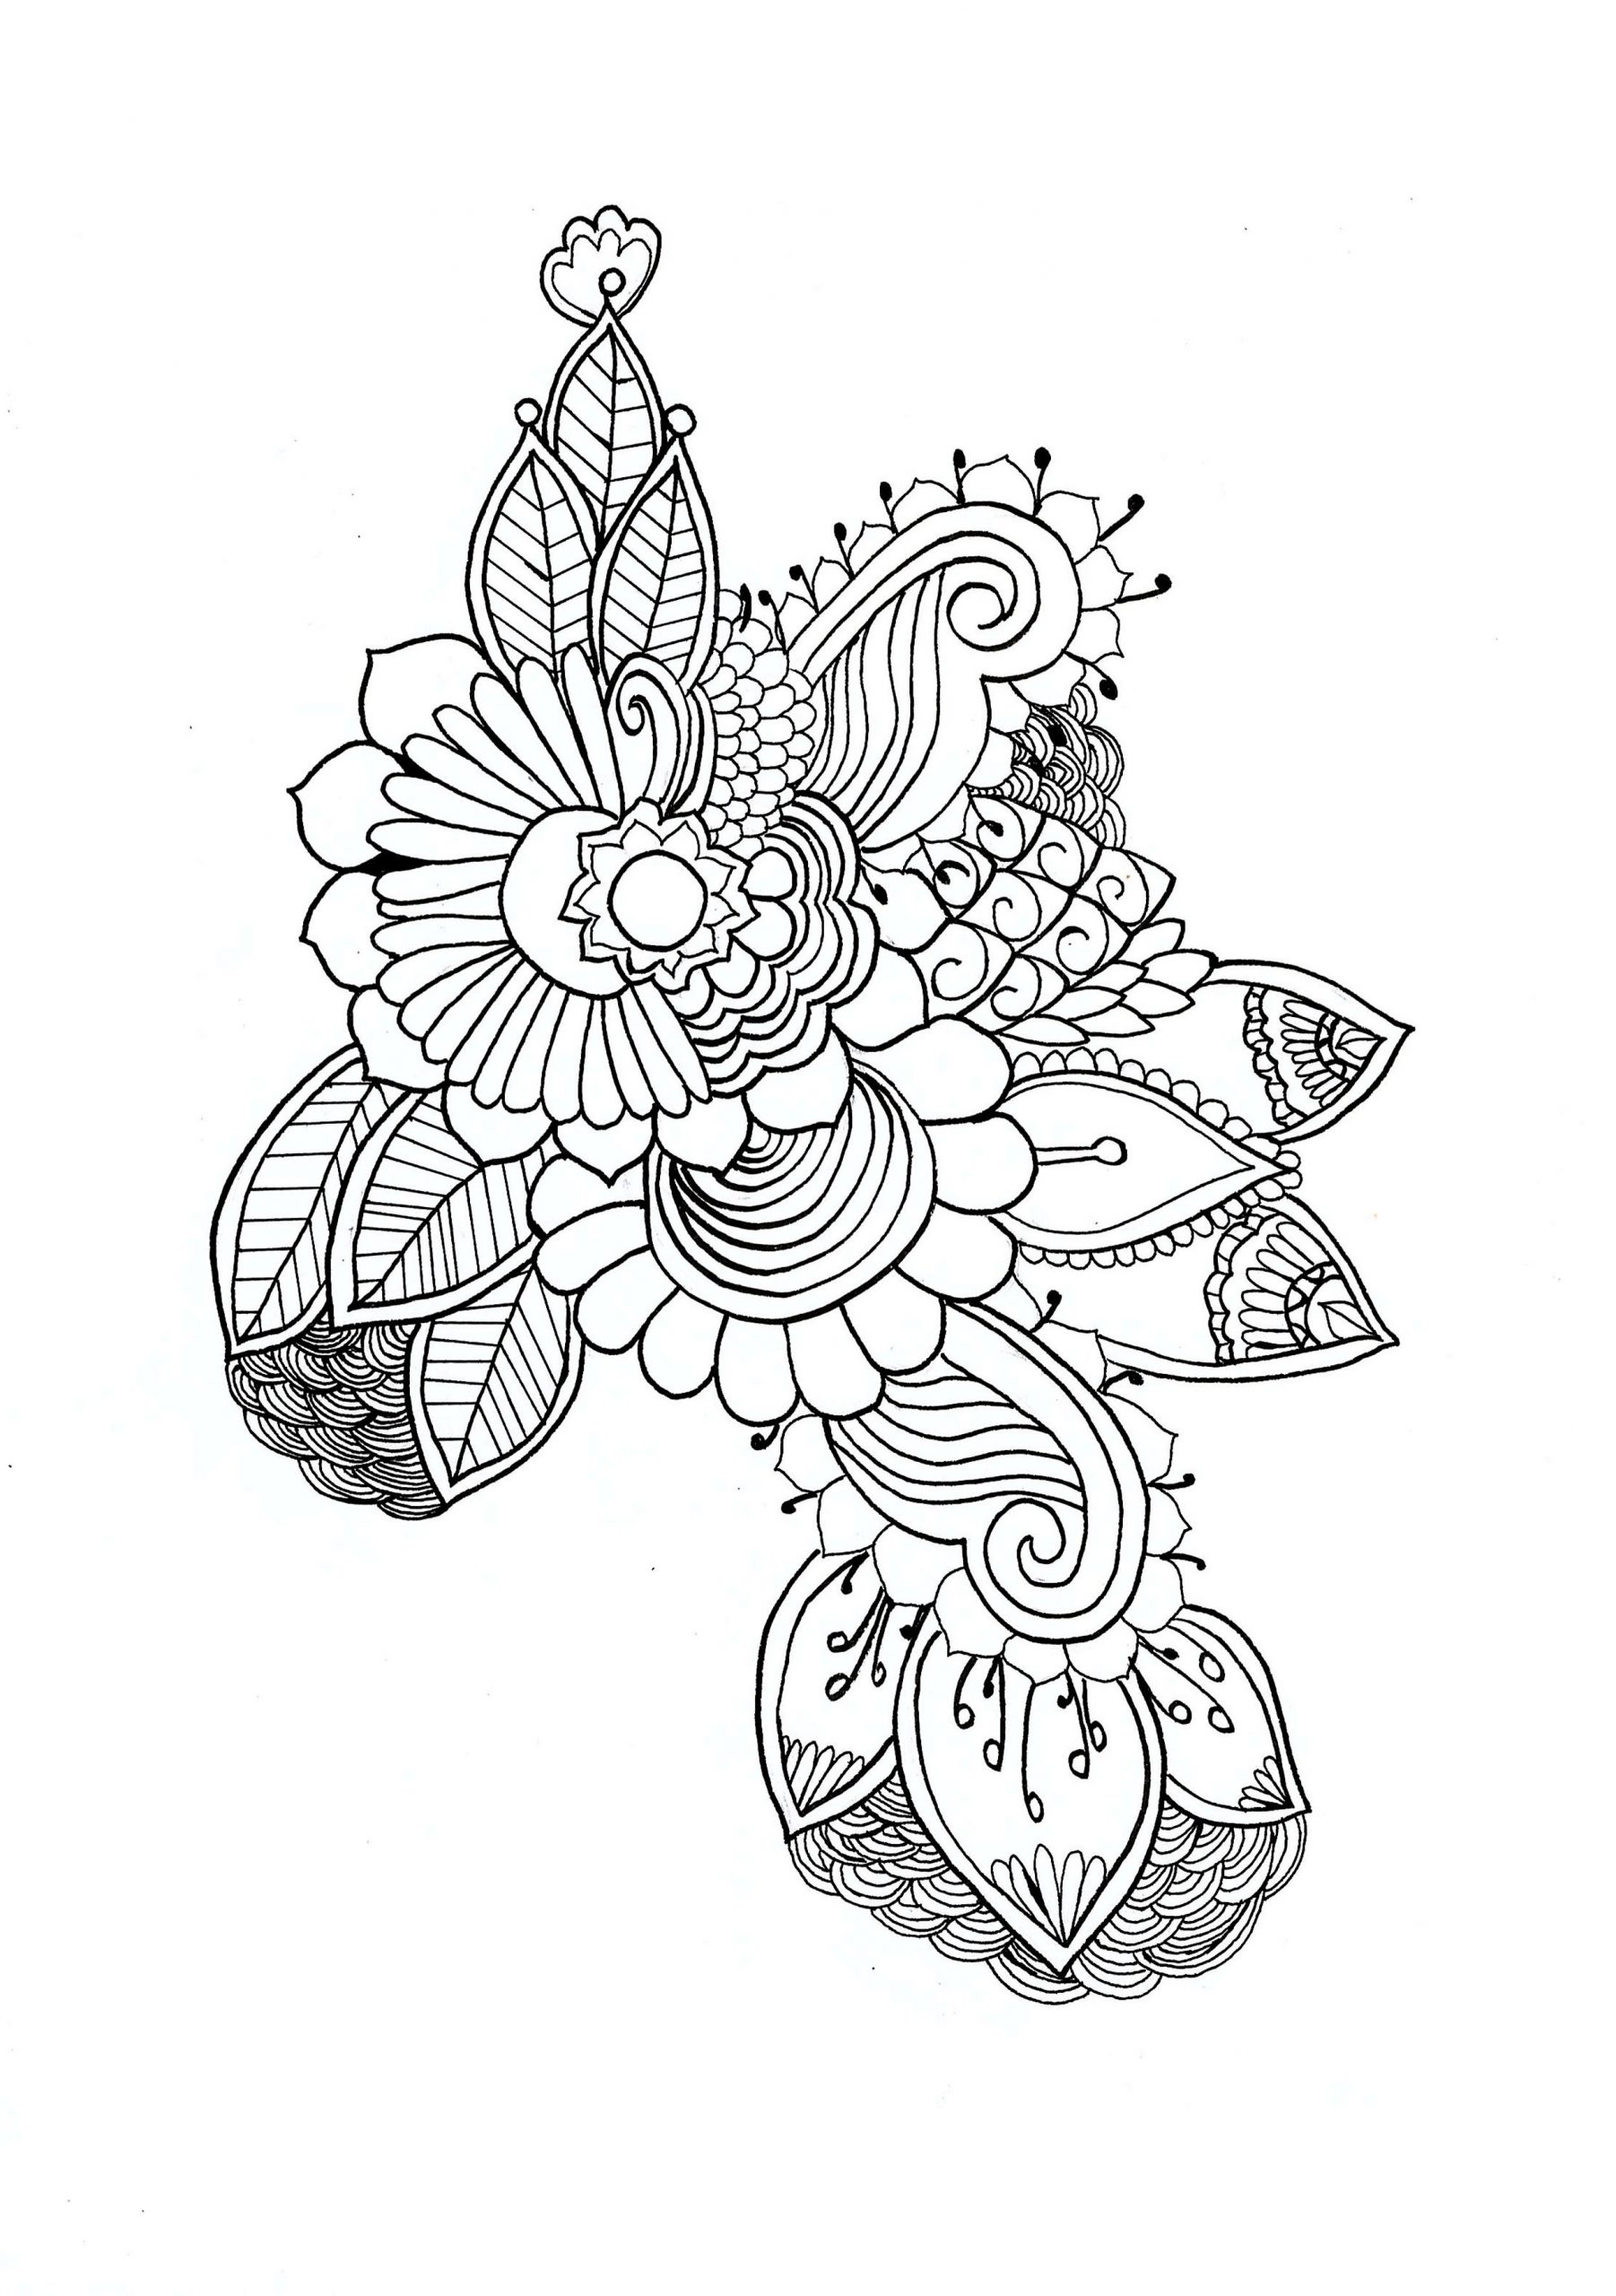 Coloriage Mandala - Greatestcoloringbook intérieur Coloriage À Imprimer Pour Adulte